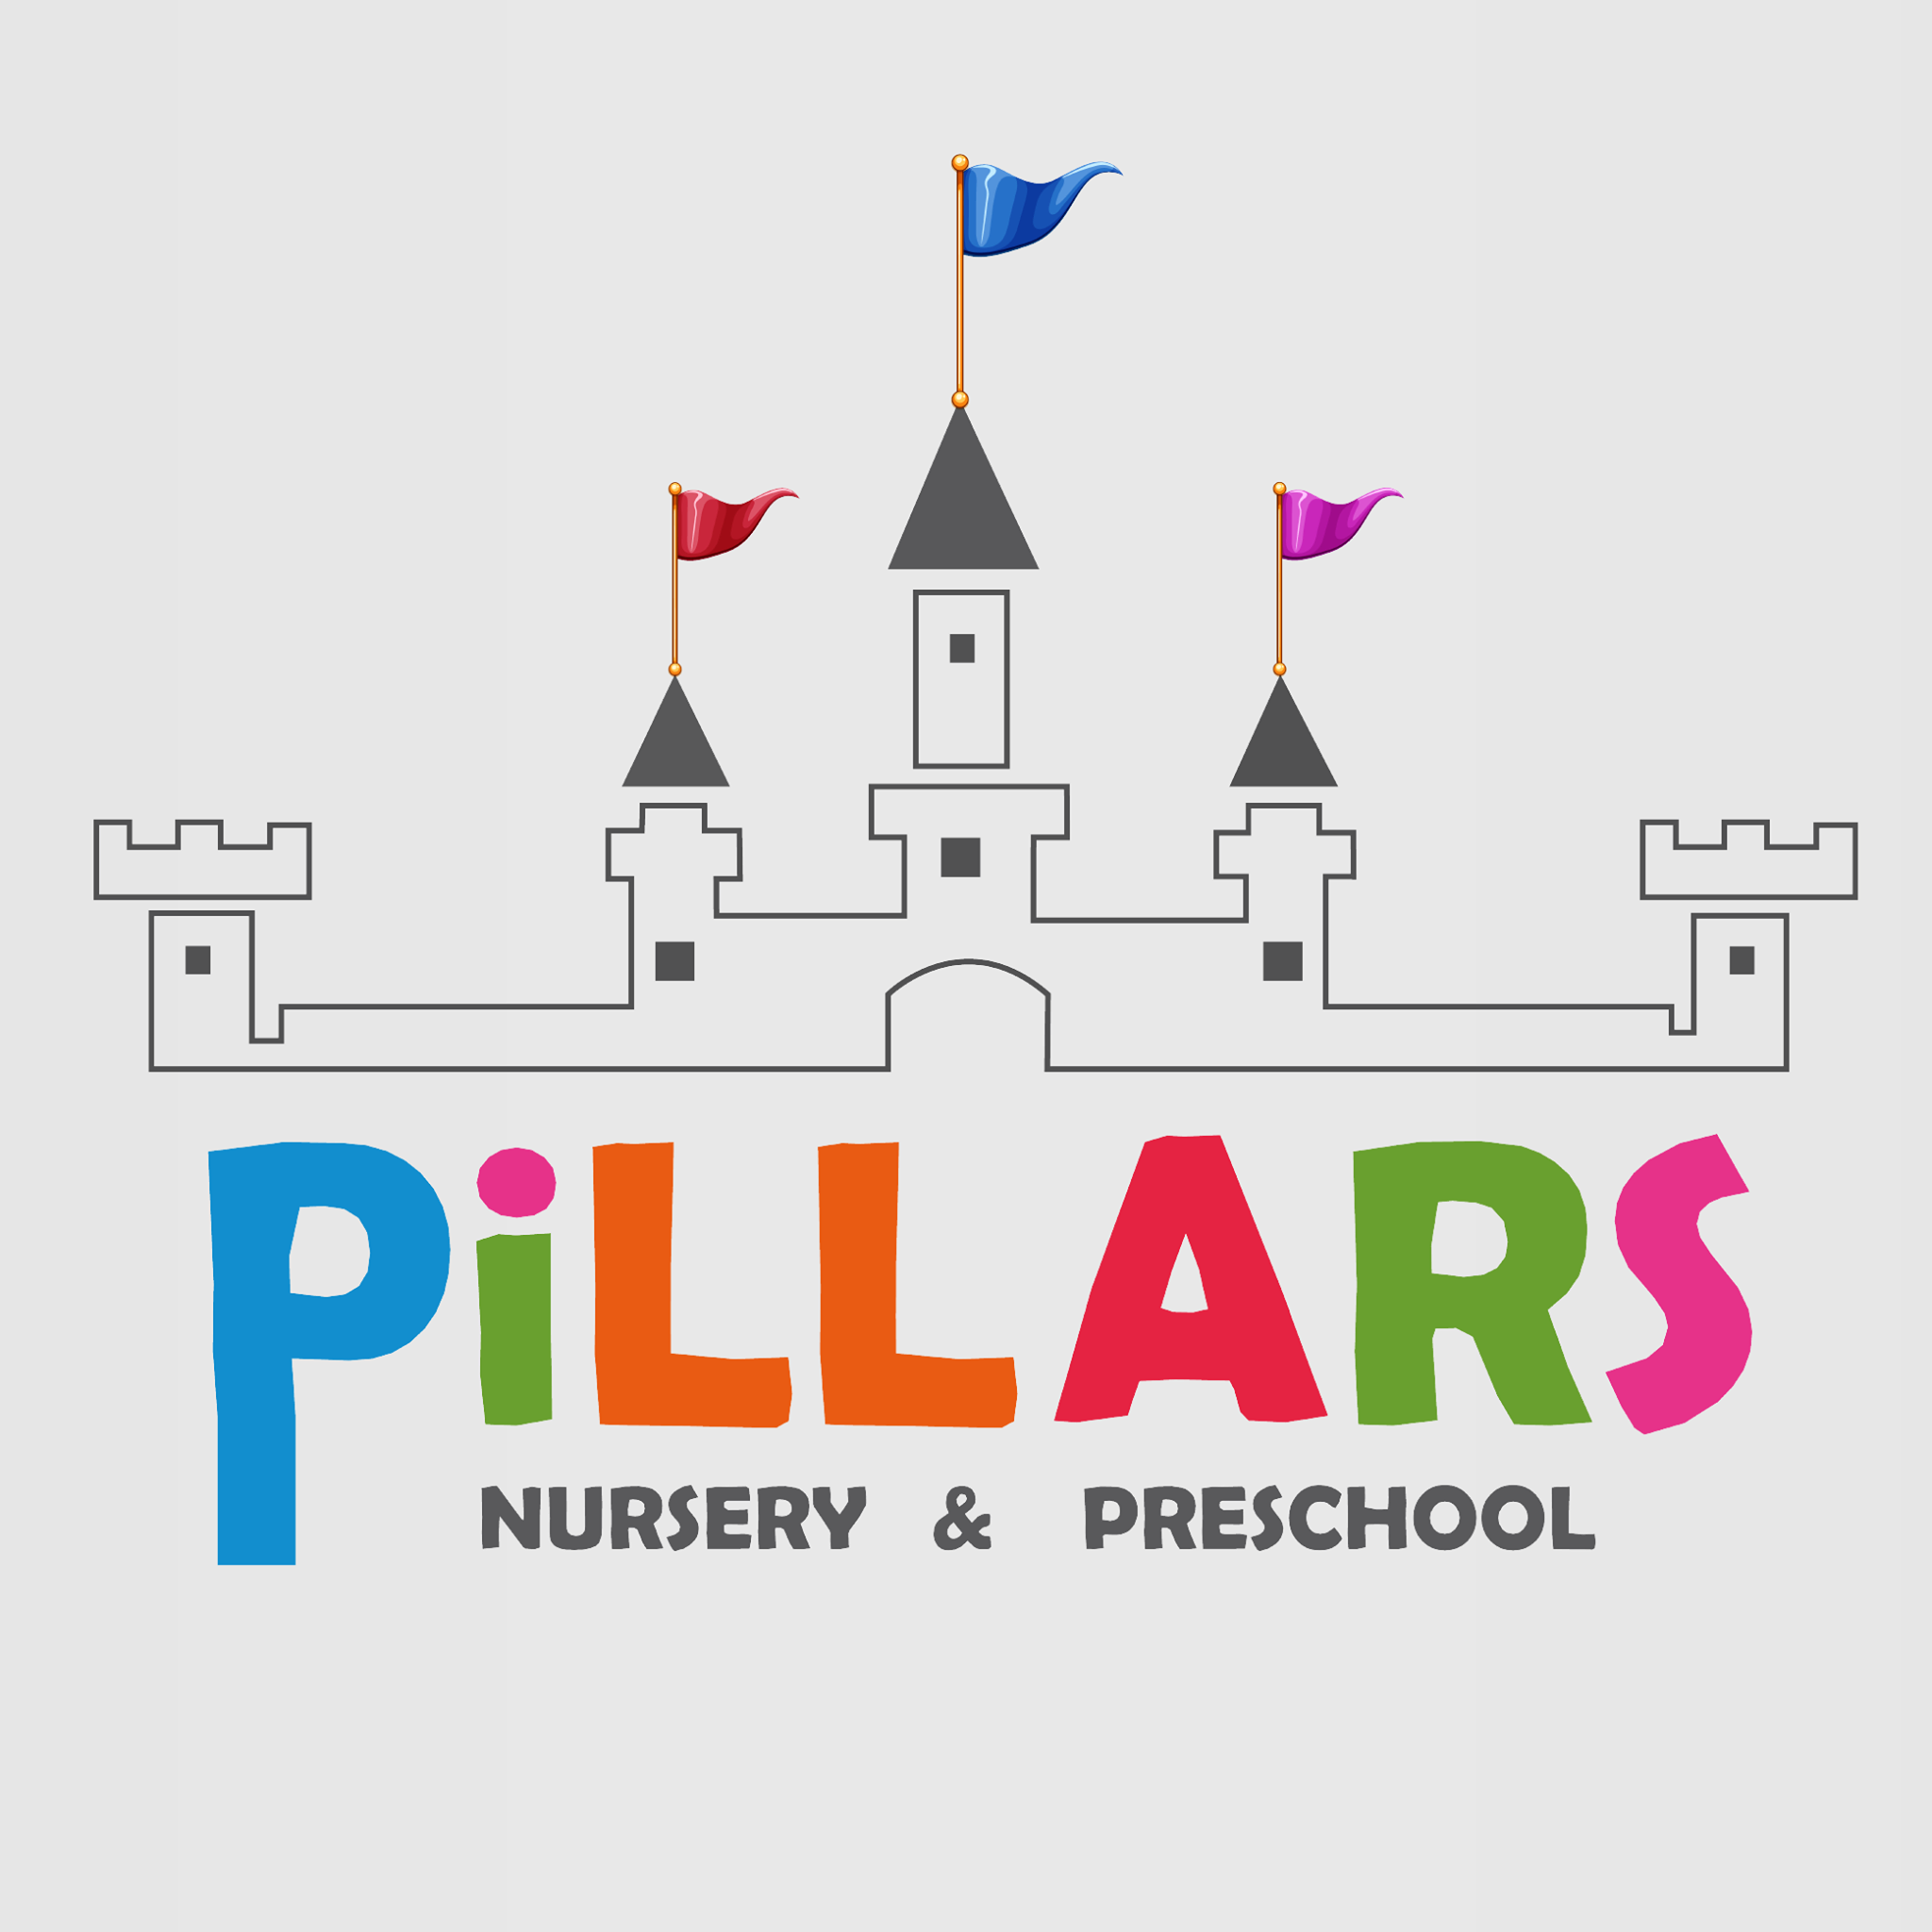 Pillars - Nursery & Preschool